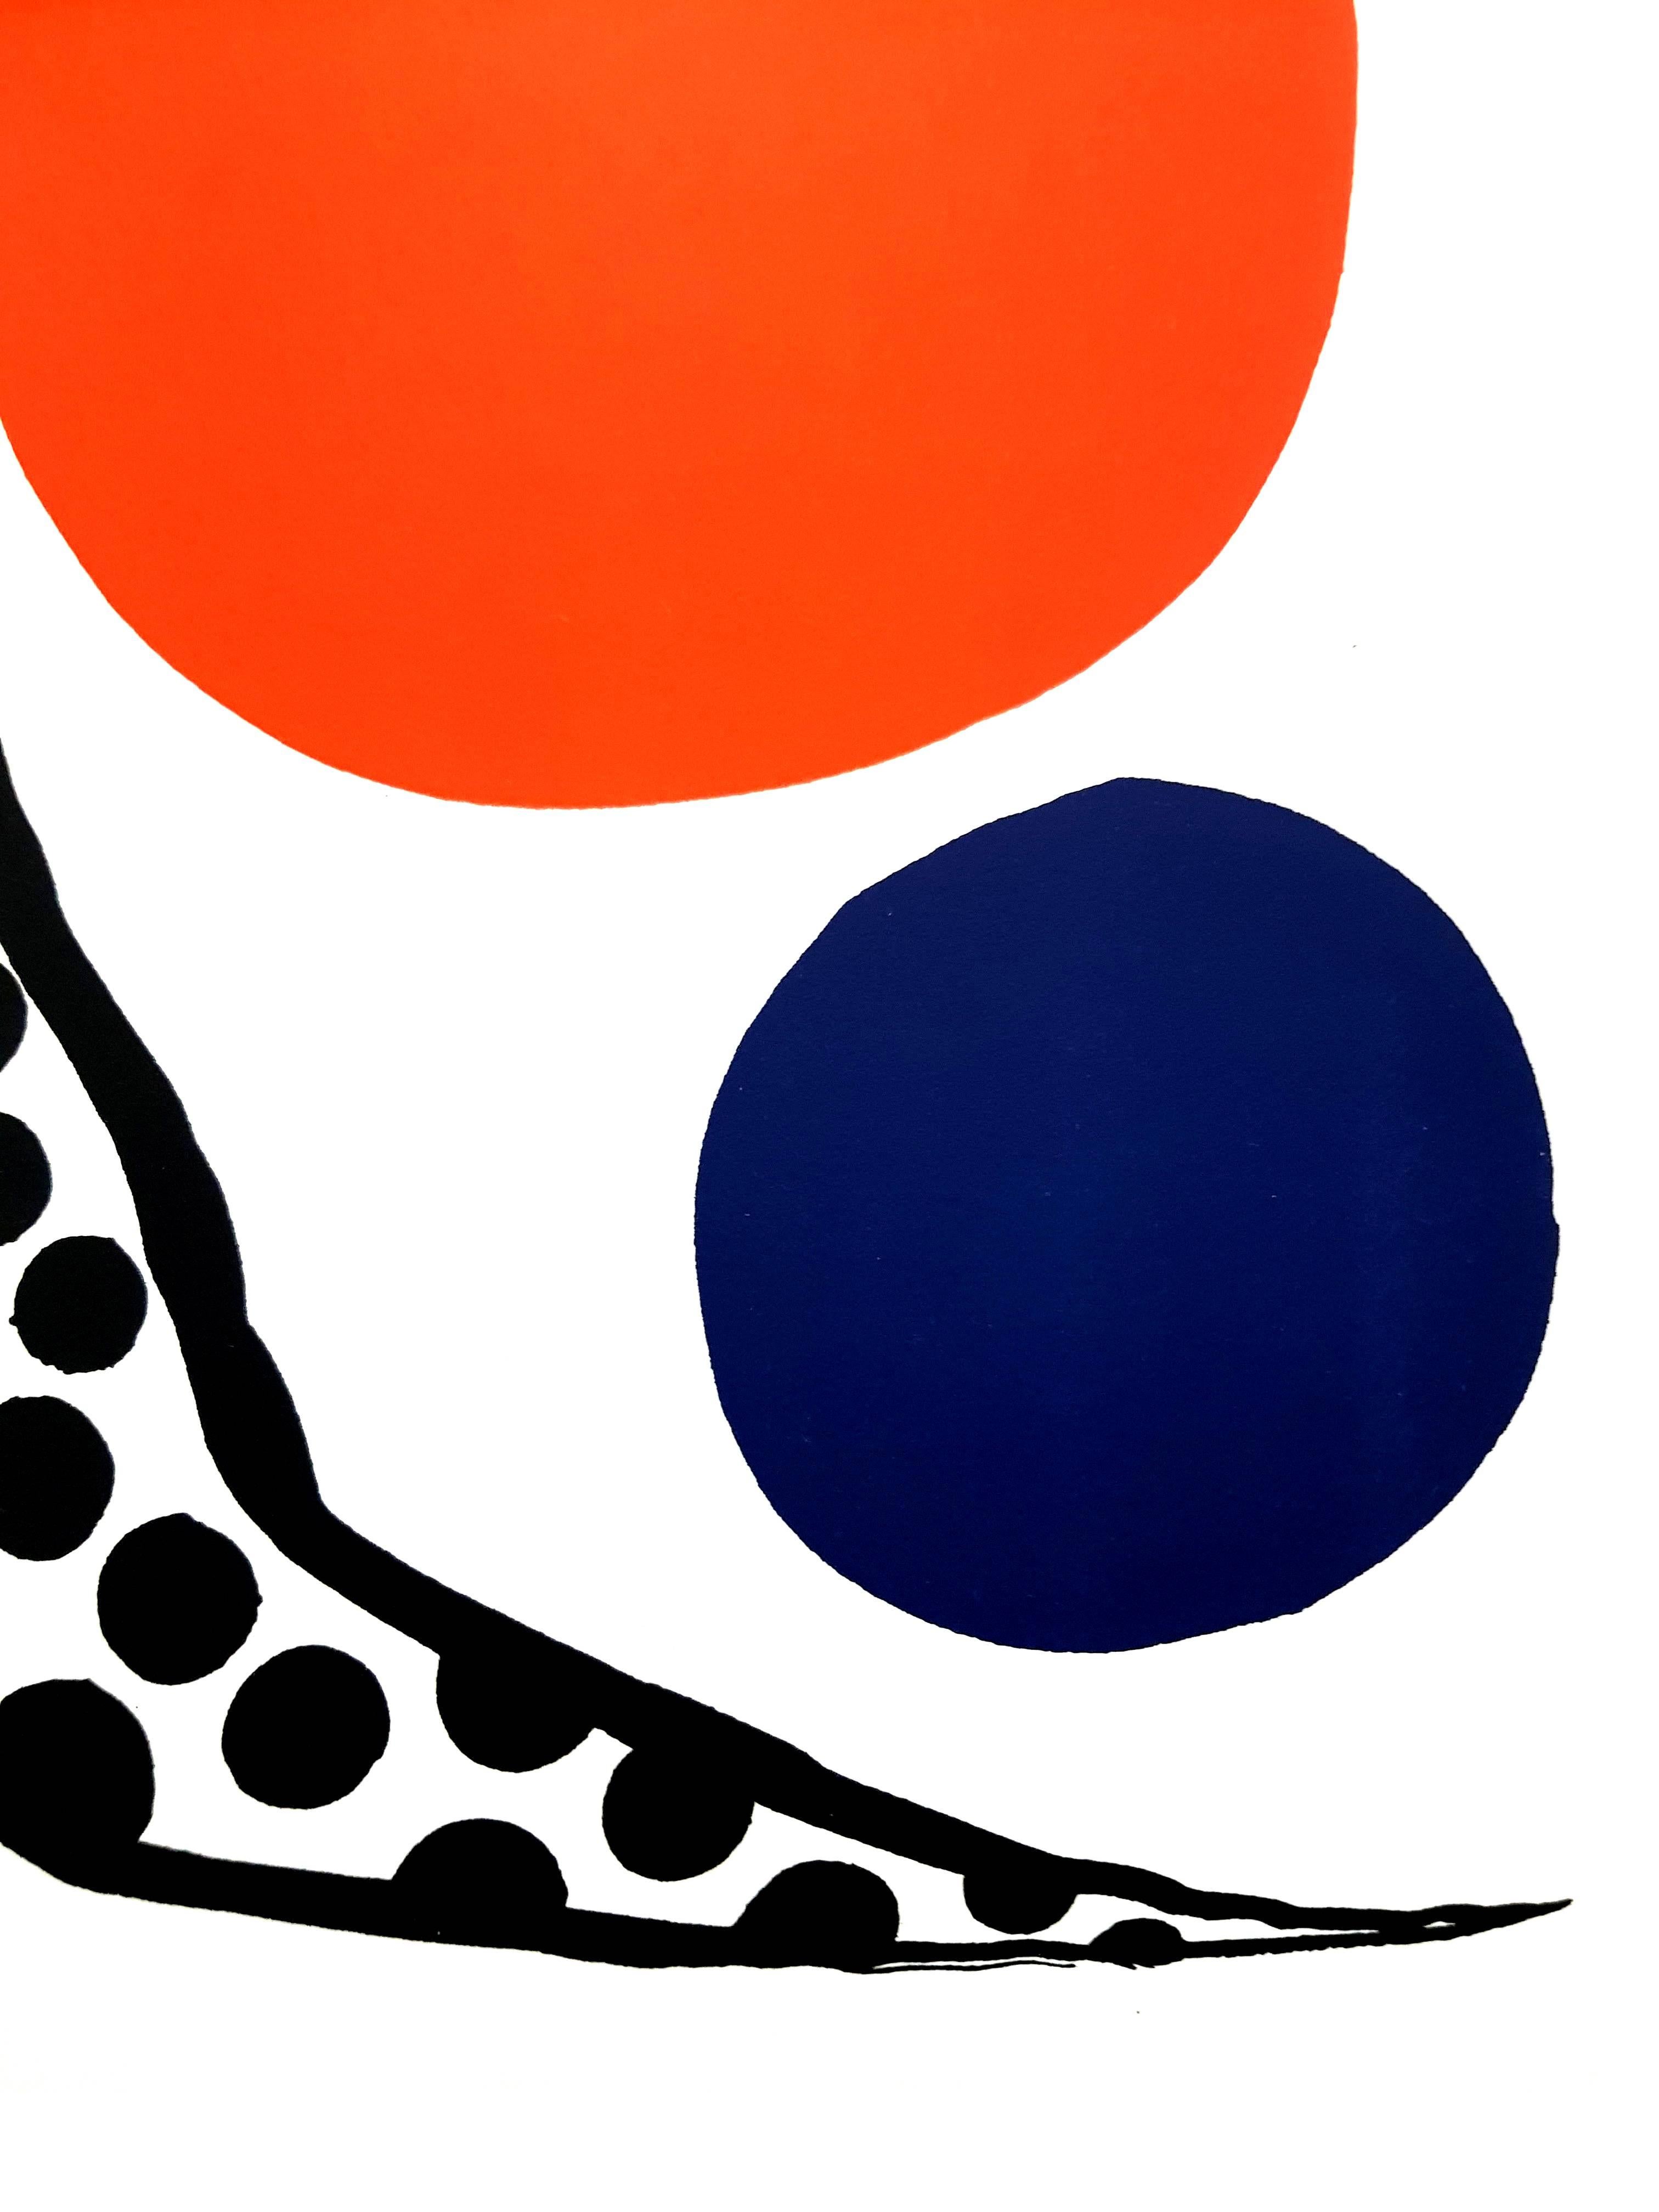 Alexander Calder - Composition - Original Lithograph from 